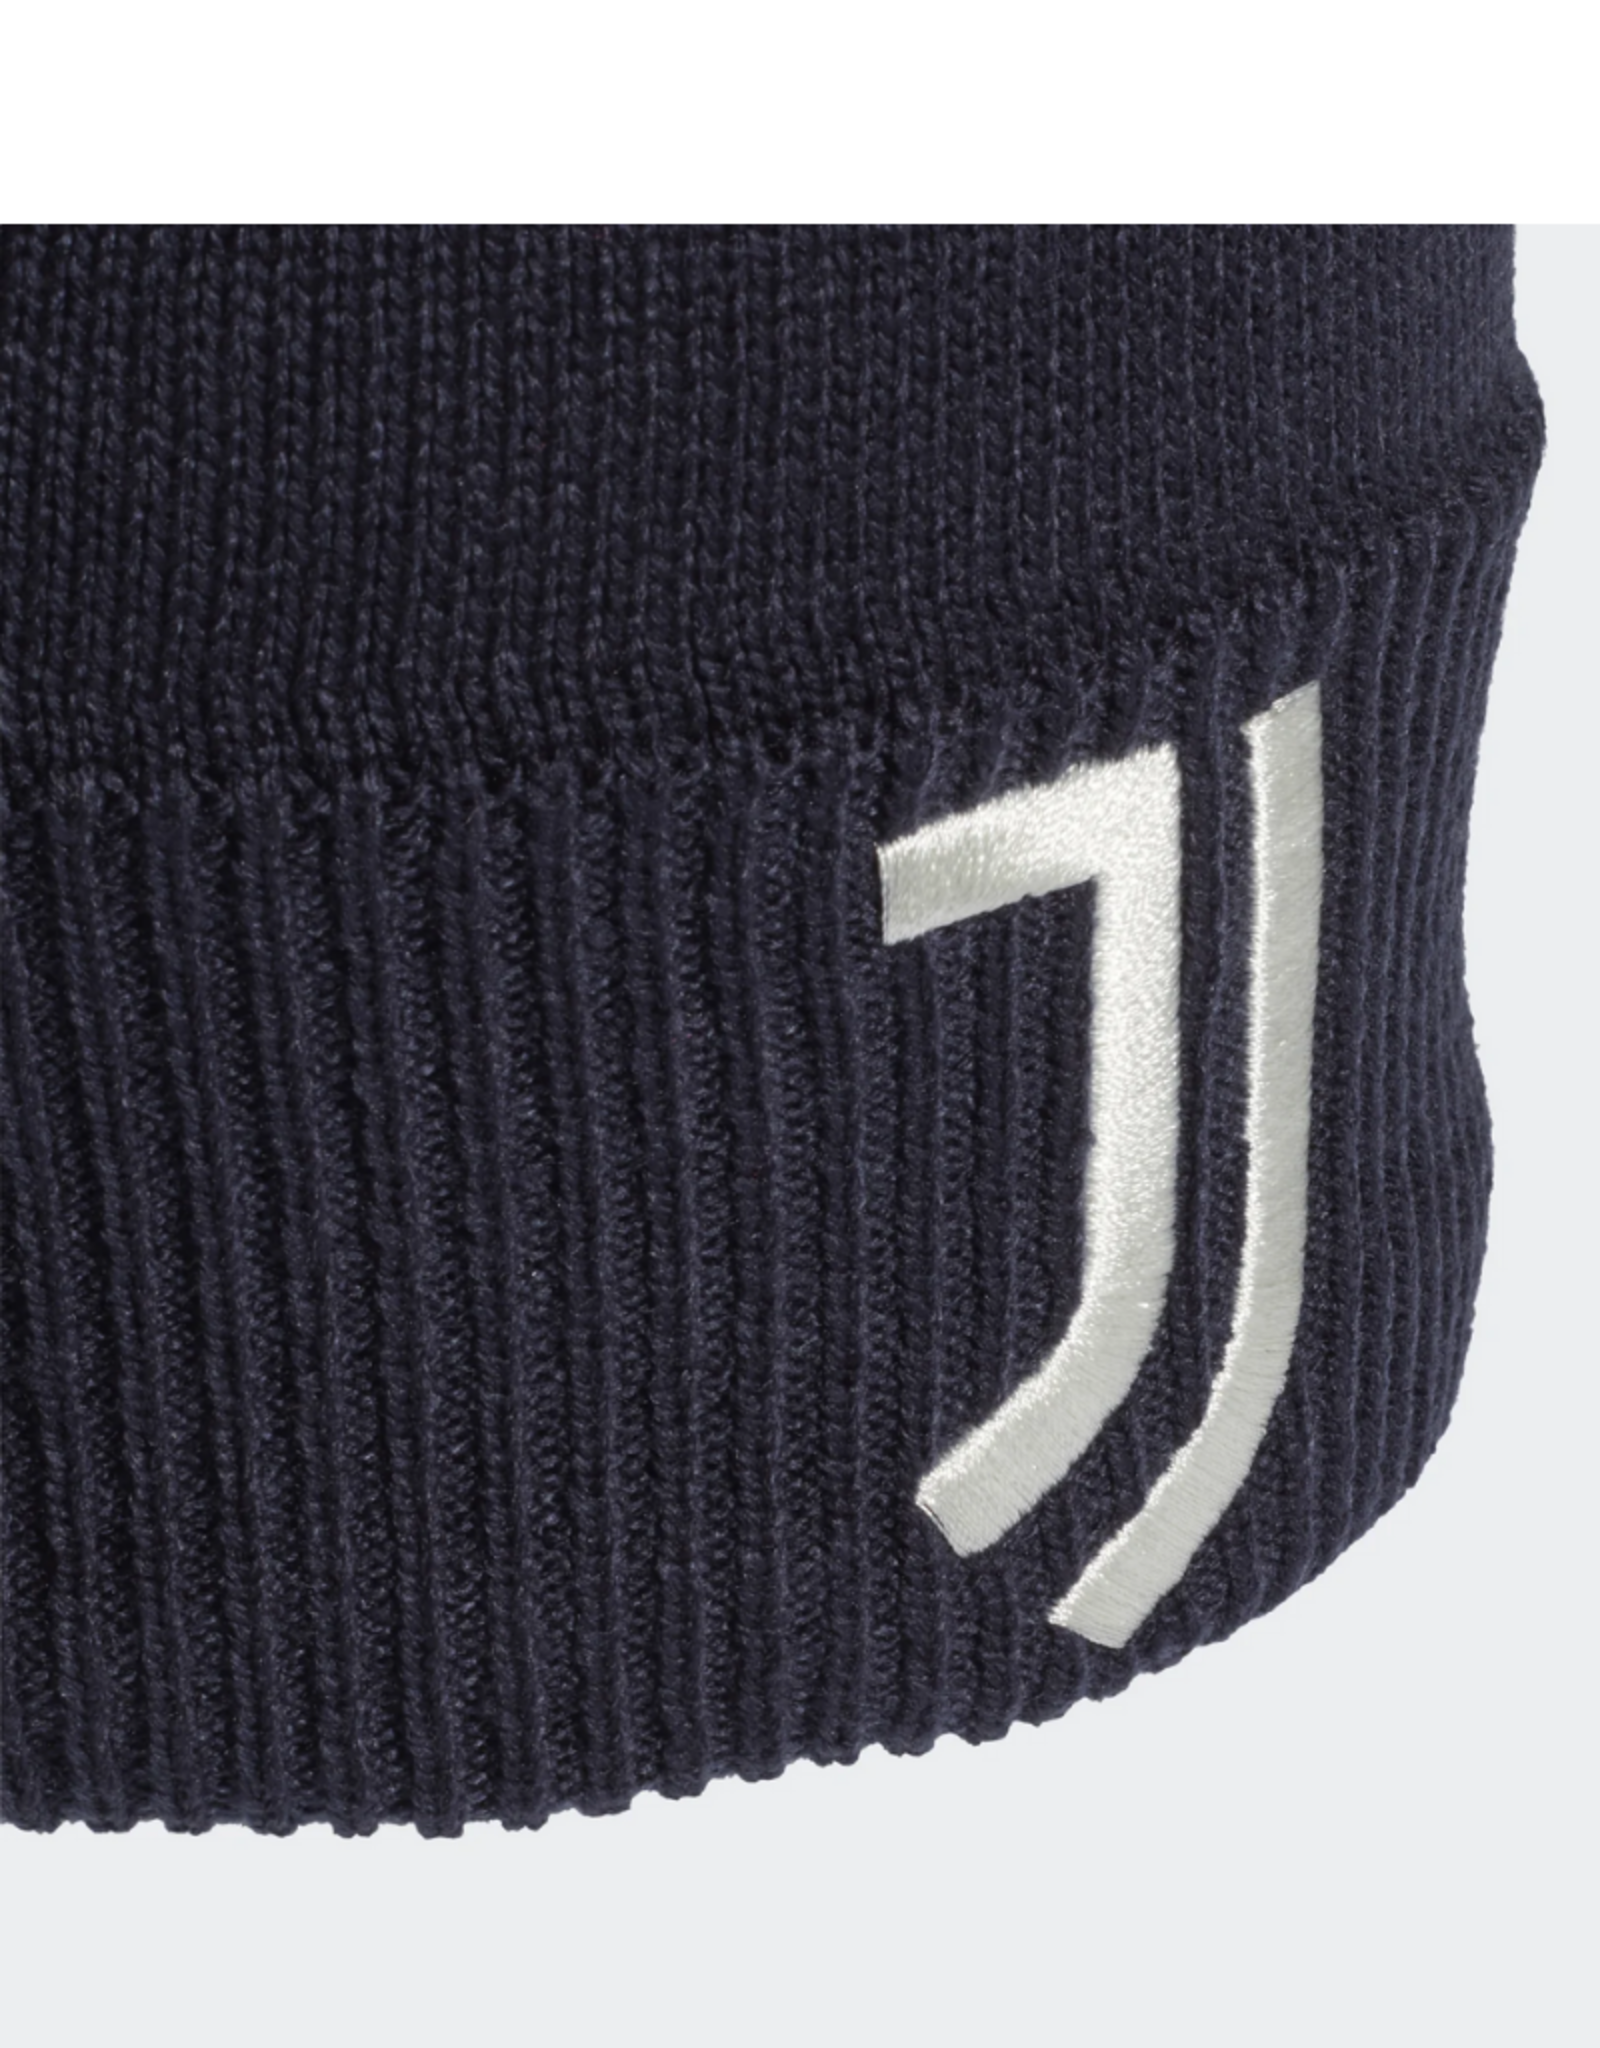 Adidas Adidas Men's Juventus Beanie Navy